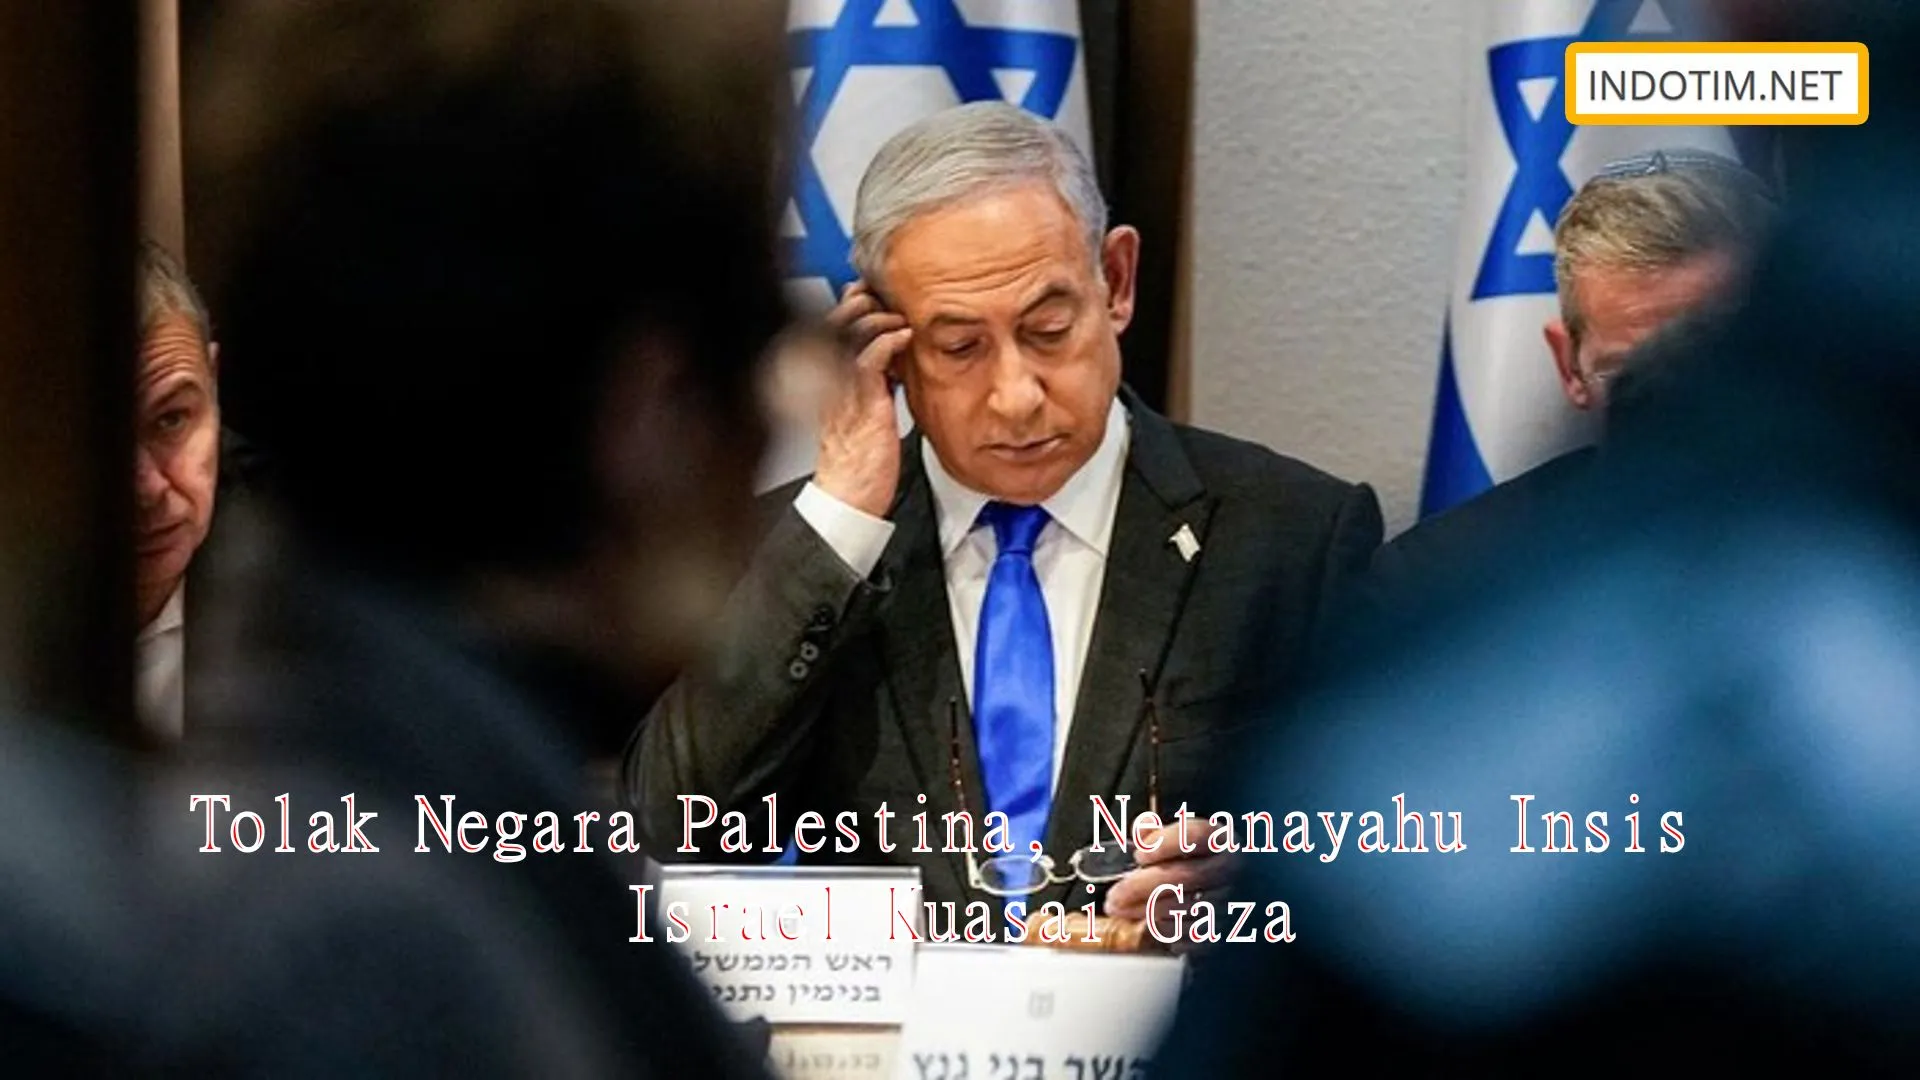 Tolak Negara Palestina, Netanayahu Insis Israel Kuasai Gaza